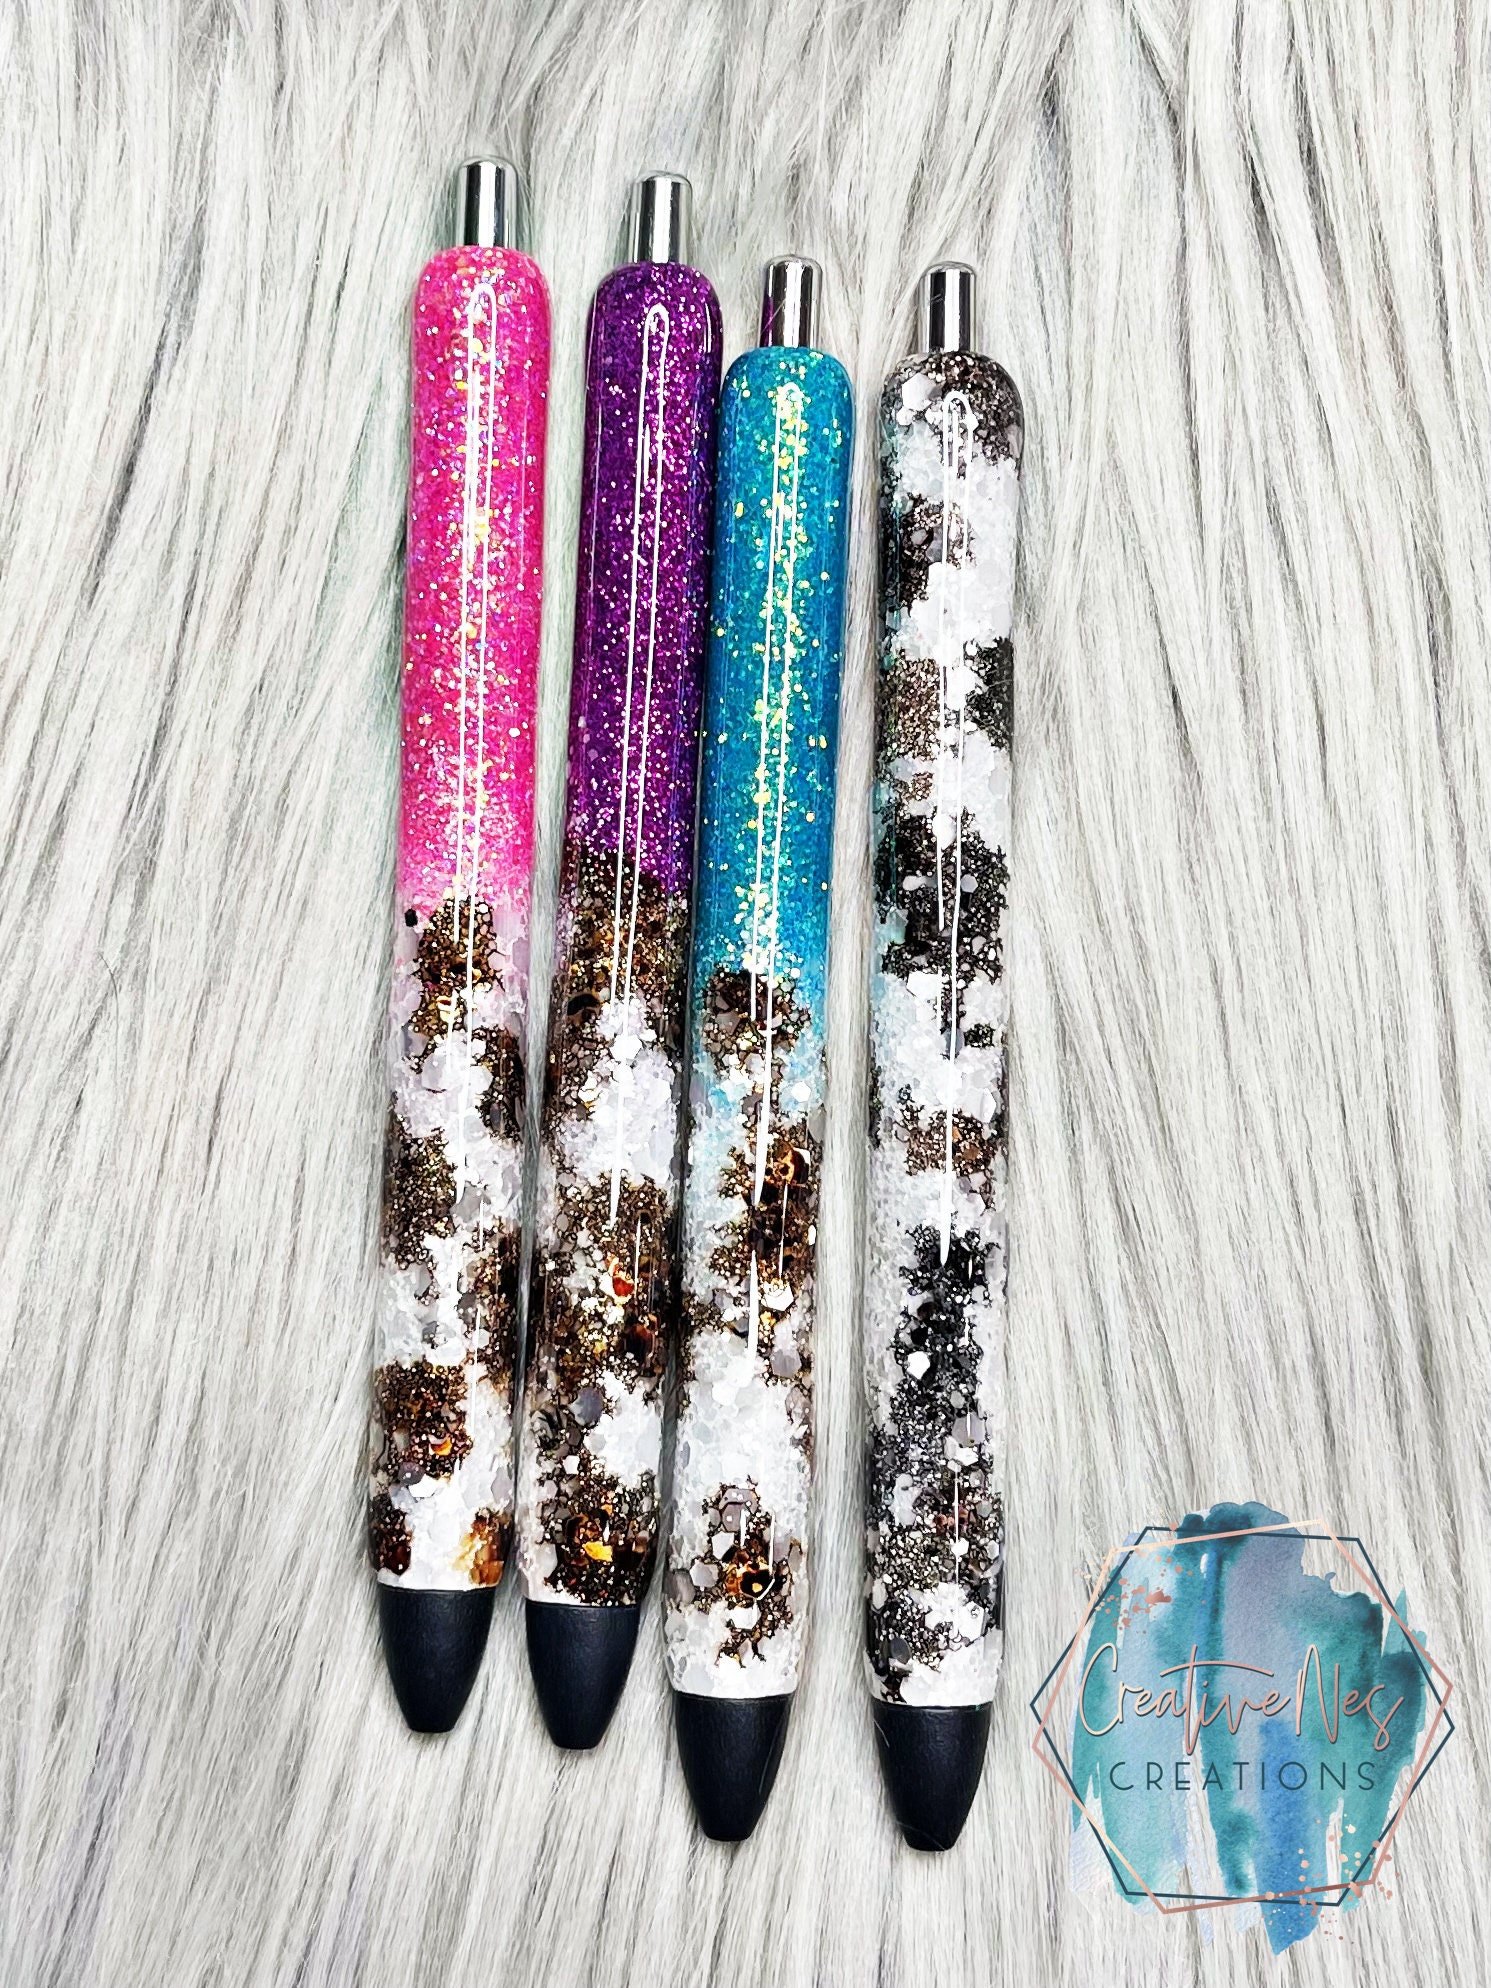 Curse Word Floral Pens, Days of the Week Pen, Swear Word Pen, Ombre Floral  Pen, Work Sucks Pen, Snarky Glitter Pen, Gift for Nurse, Sass Pen 